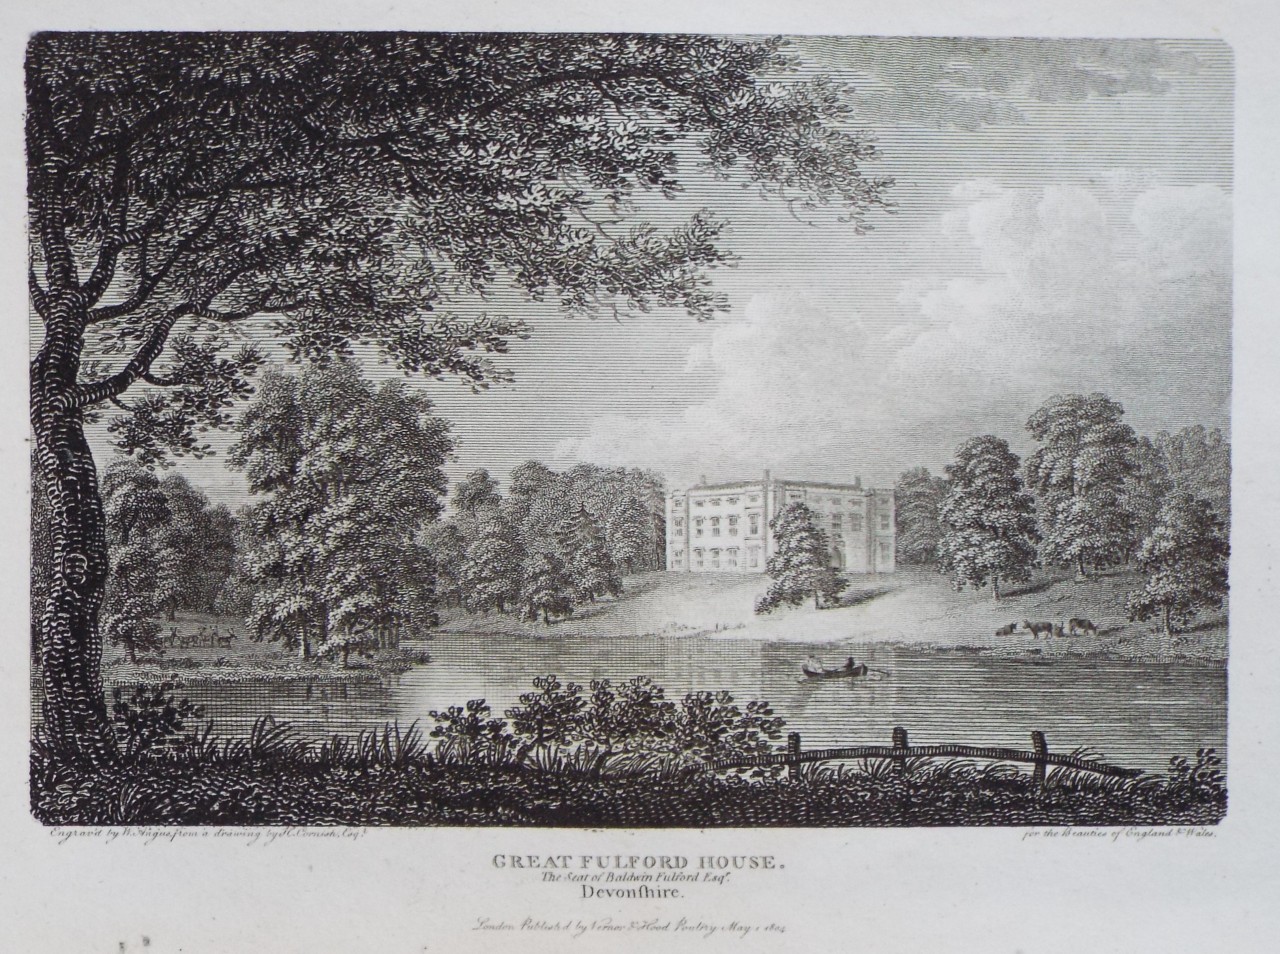 Print - Great Fulford House, the Seat of Baldwin Fulford Esqr, Devonshire. - Angus